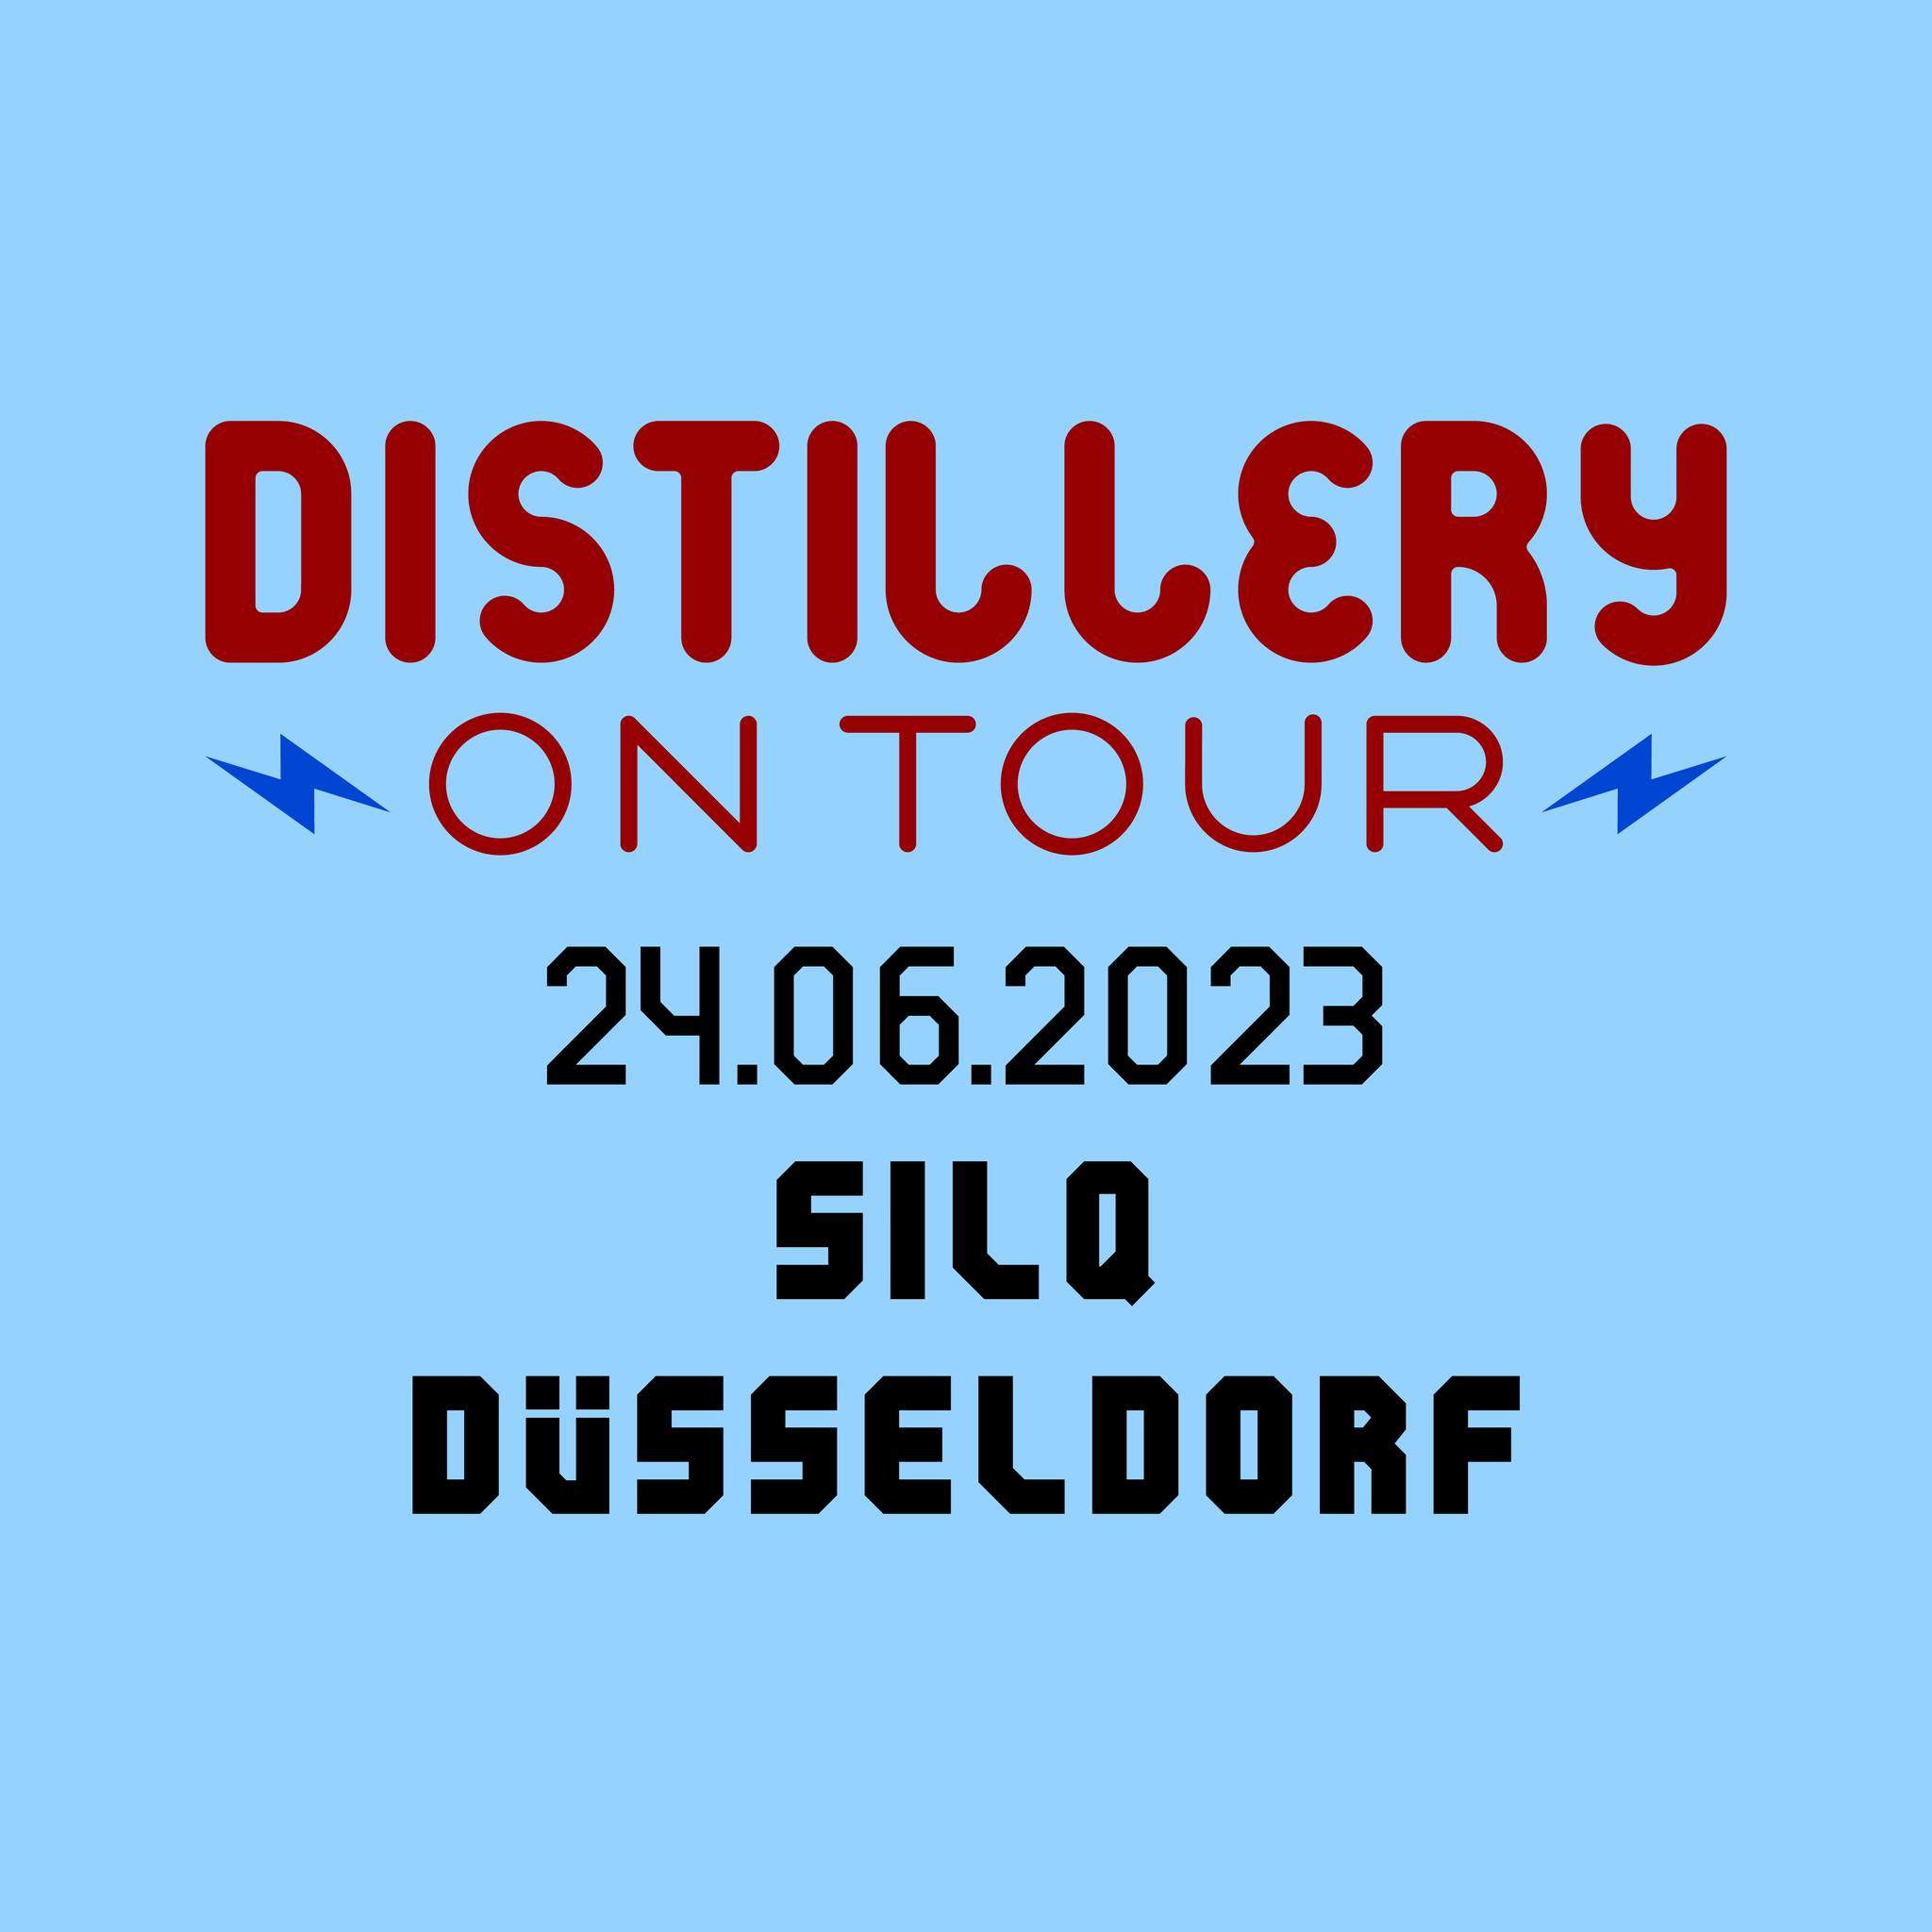 DISTILLERY ON TOUR with Daniel Stefanik, Anna Malysz, Shuray & Walle - フライヤー表